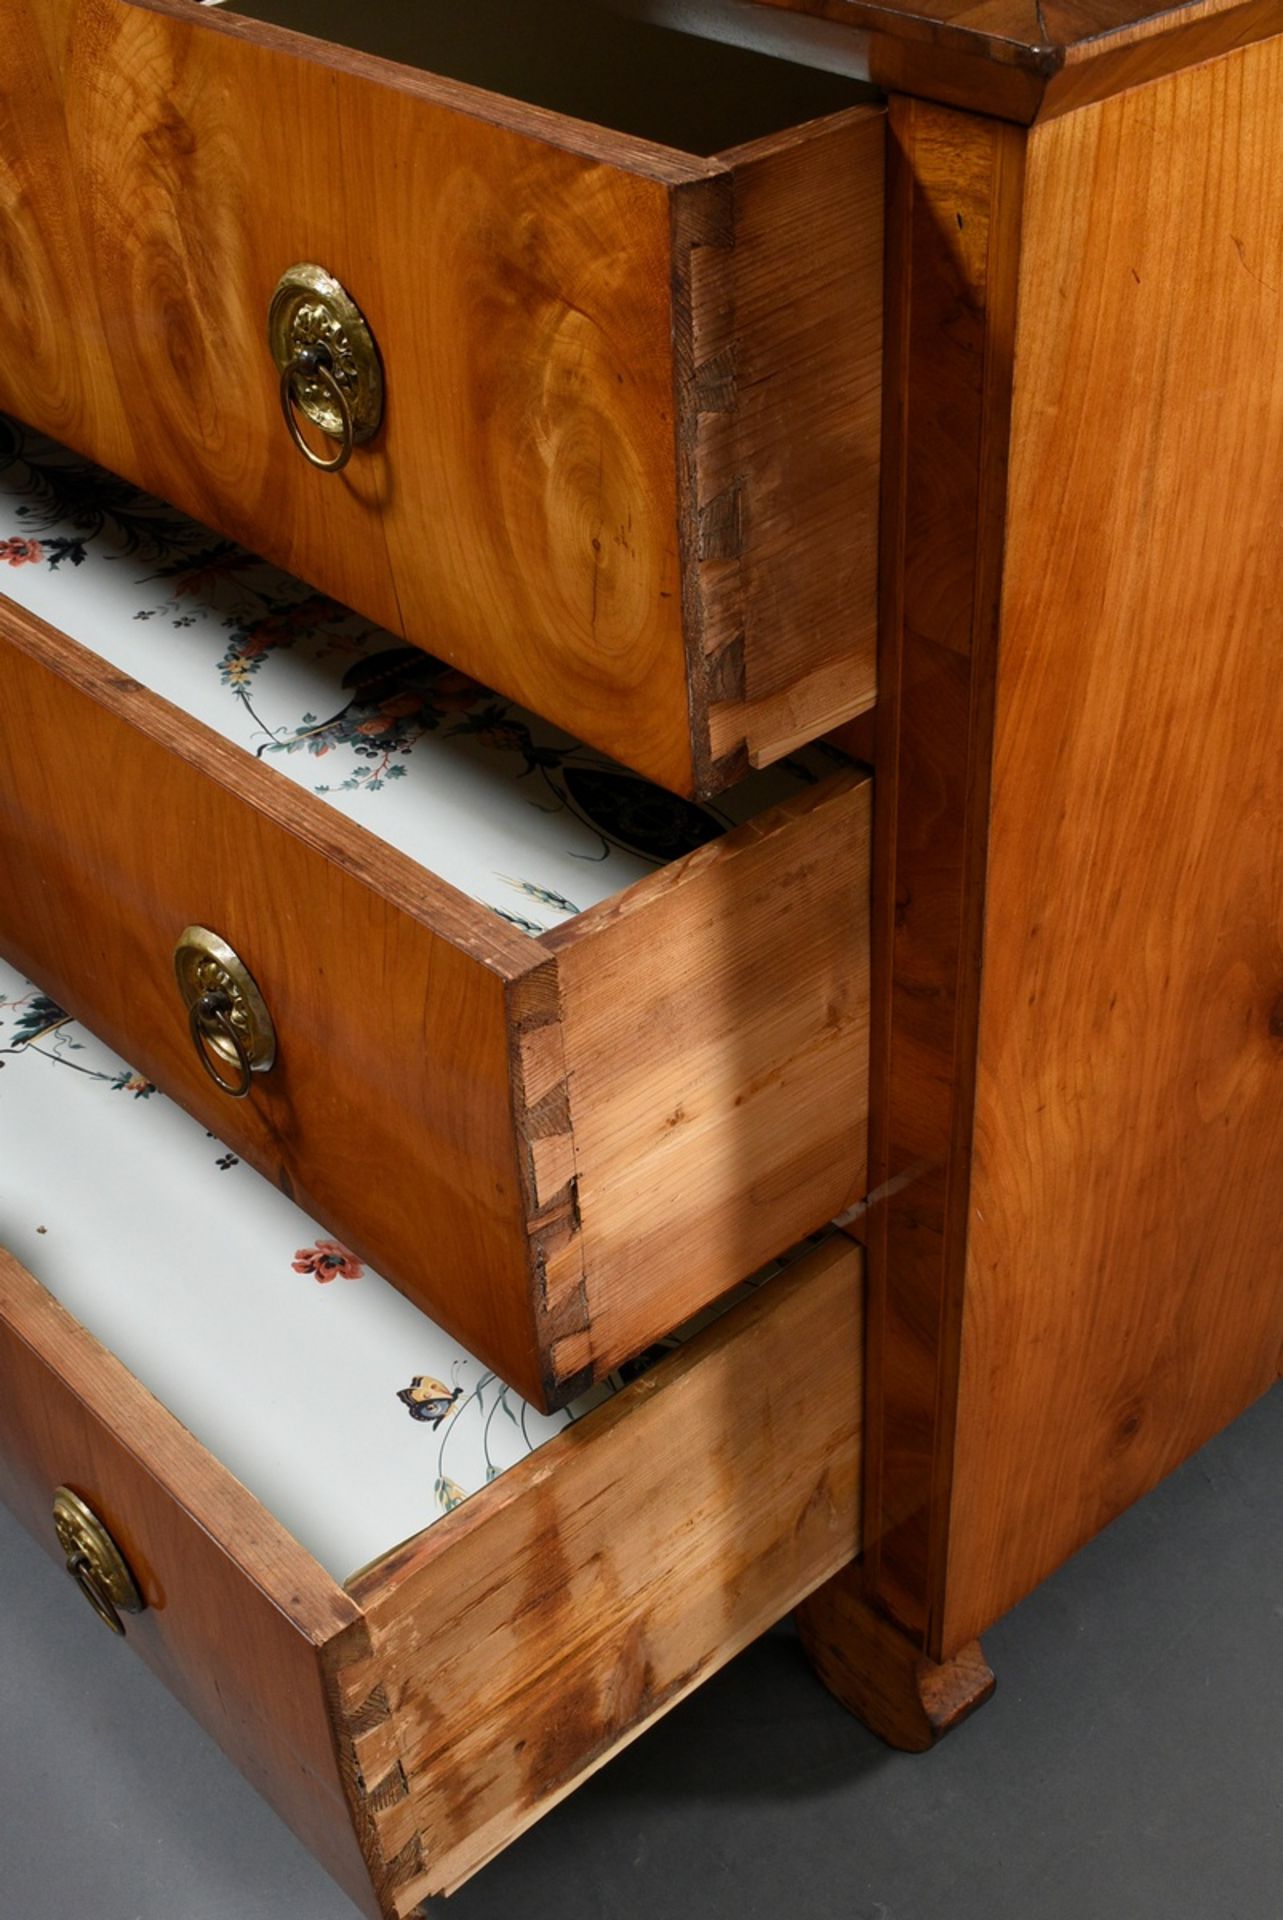 Southern German Biedermeier chest of drawers in simple façon, cherry veneered on softwood, original - Image 4 of 5